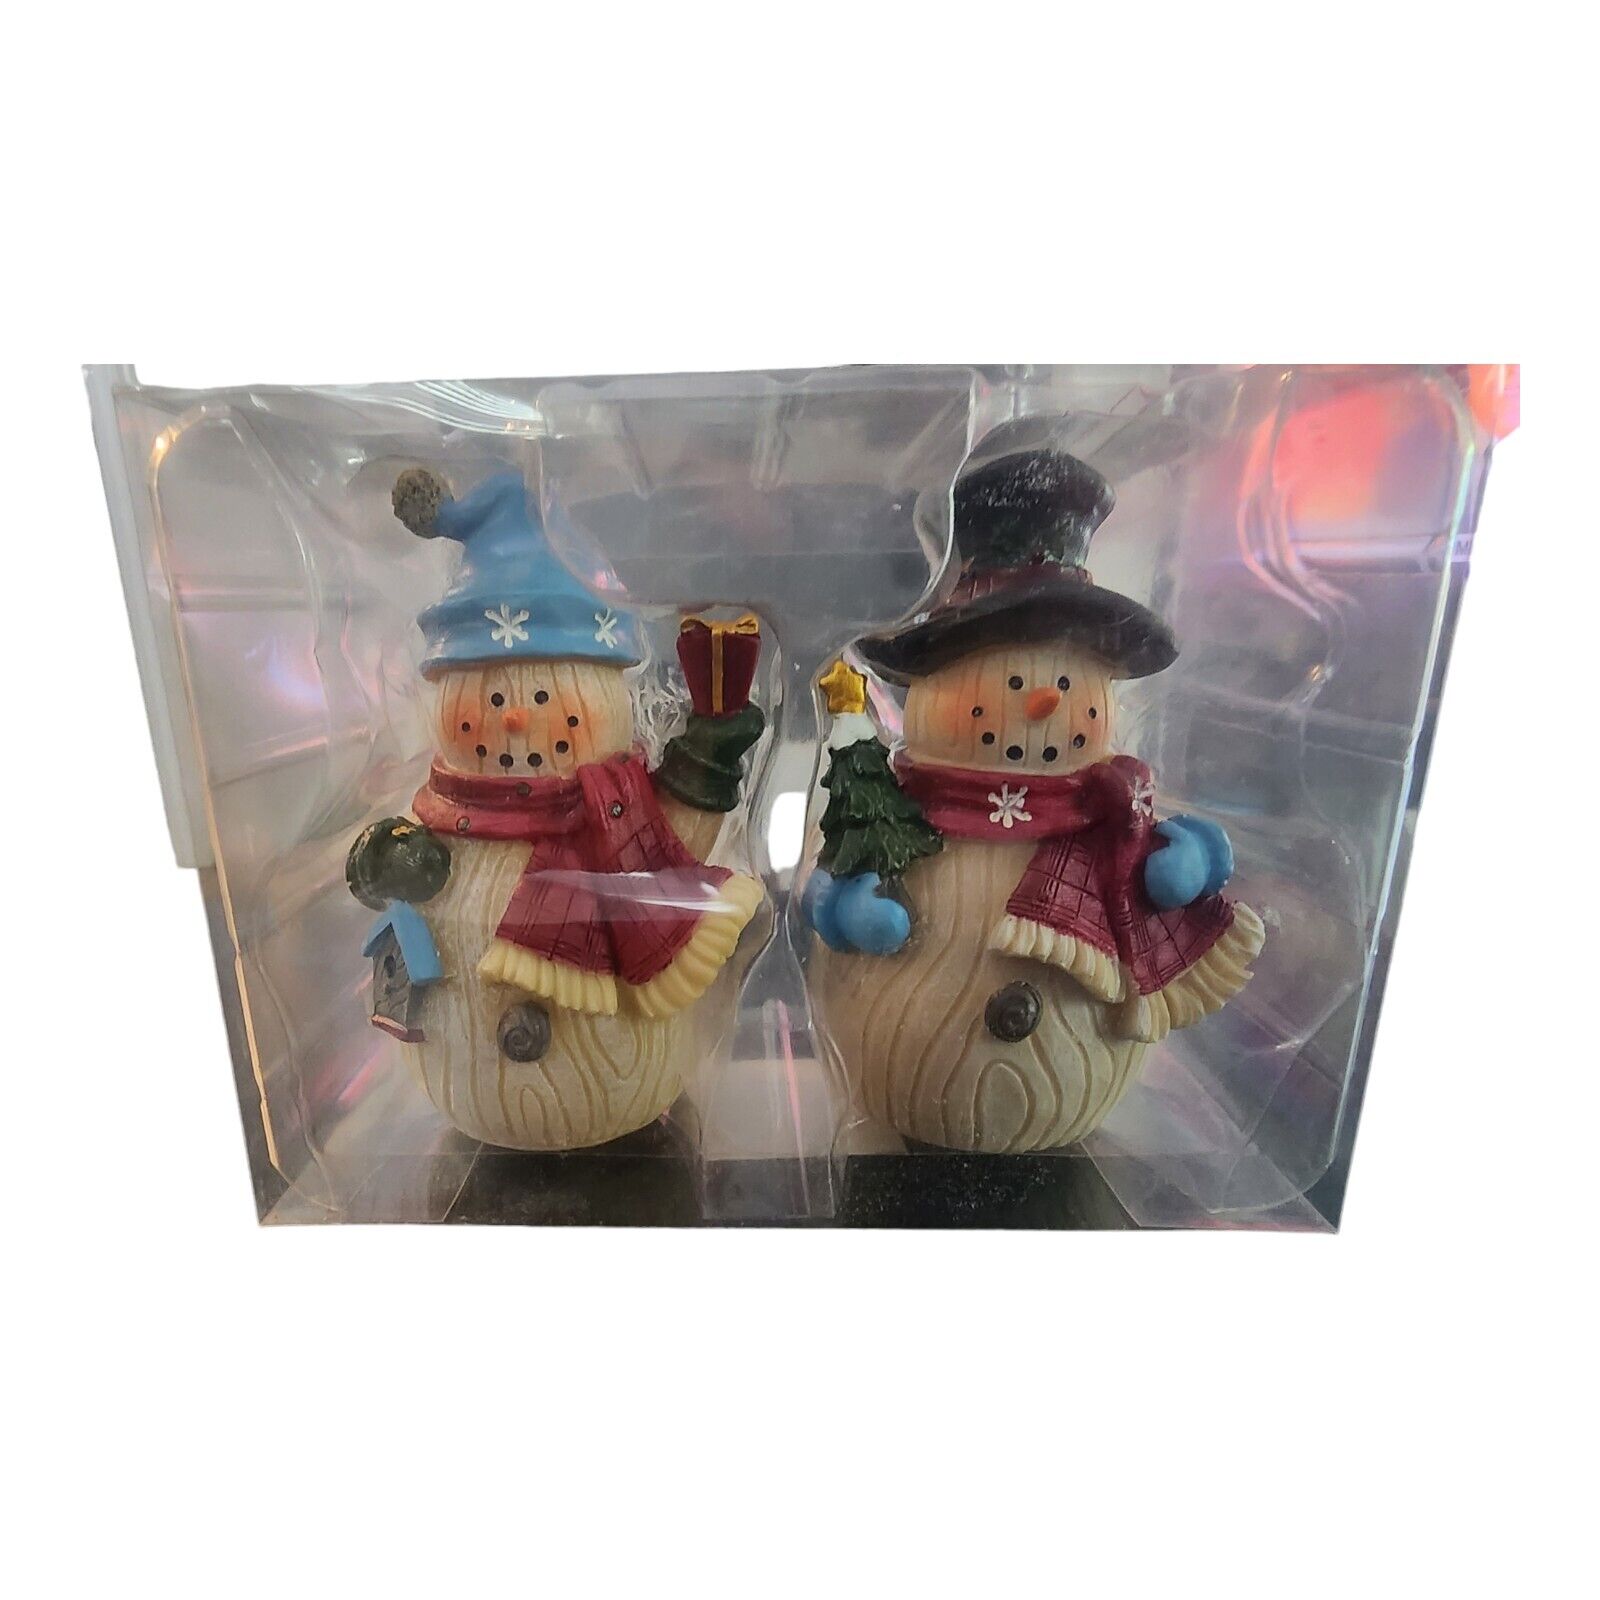 NIB Vintage Set of 2 Christmas Snowmen Figures Ceramic -Hobby Lobby - 2017